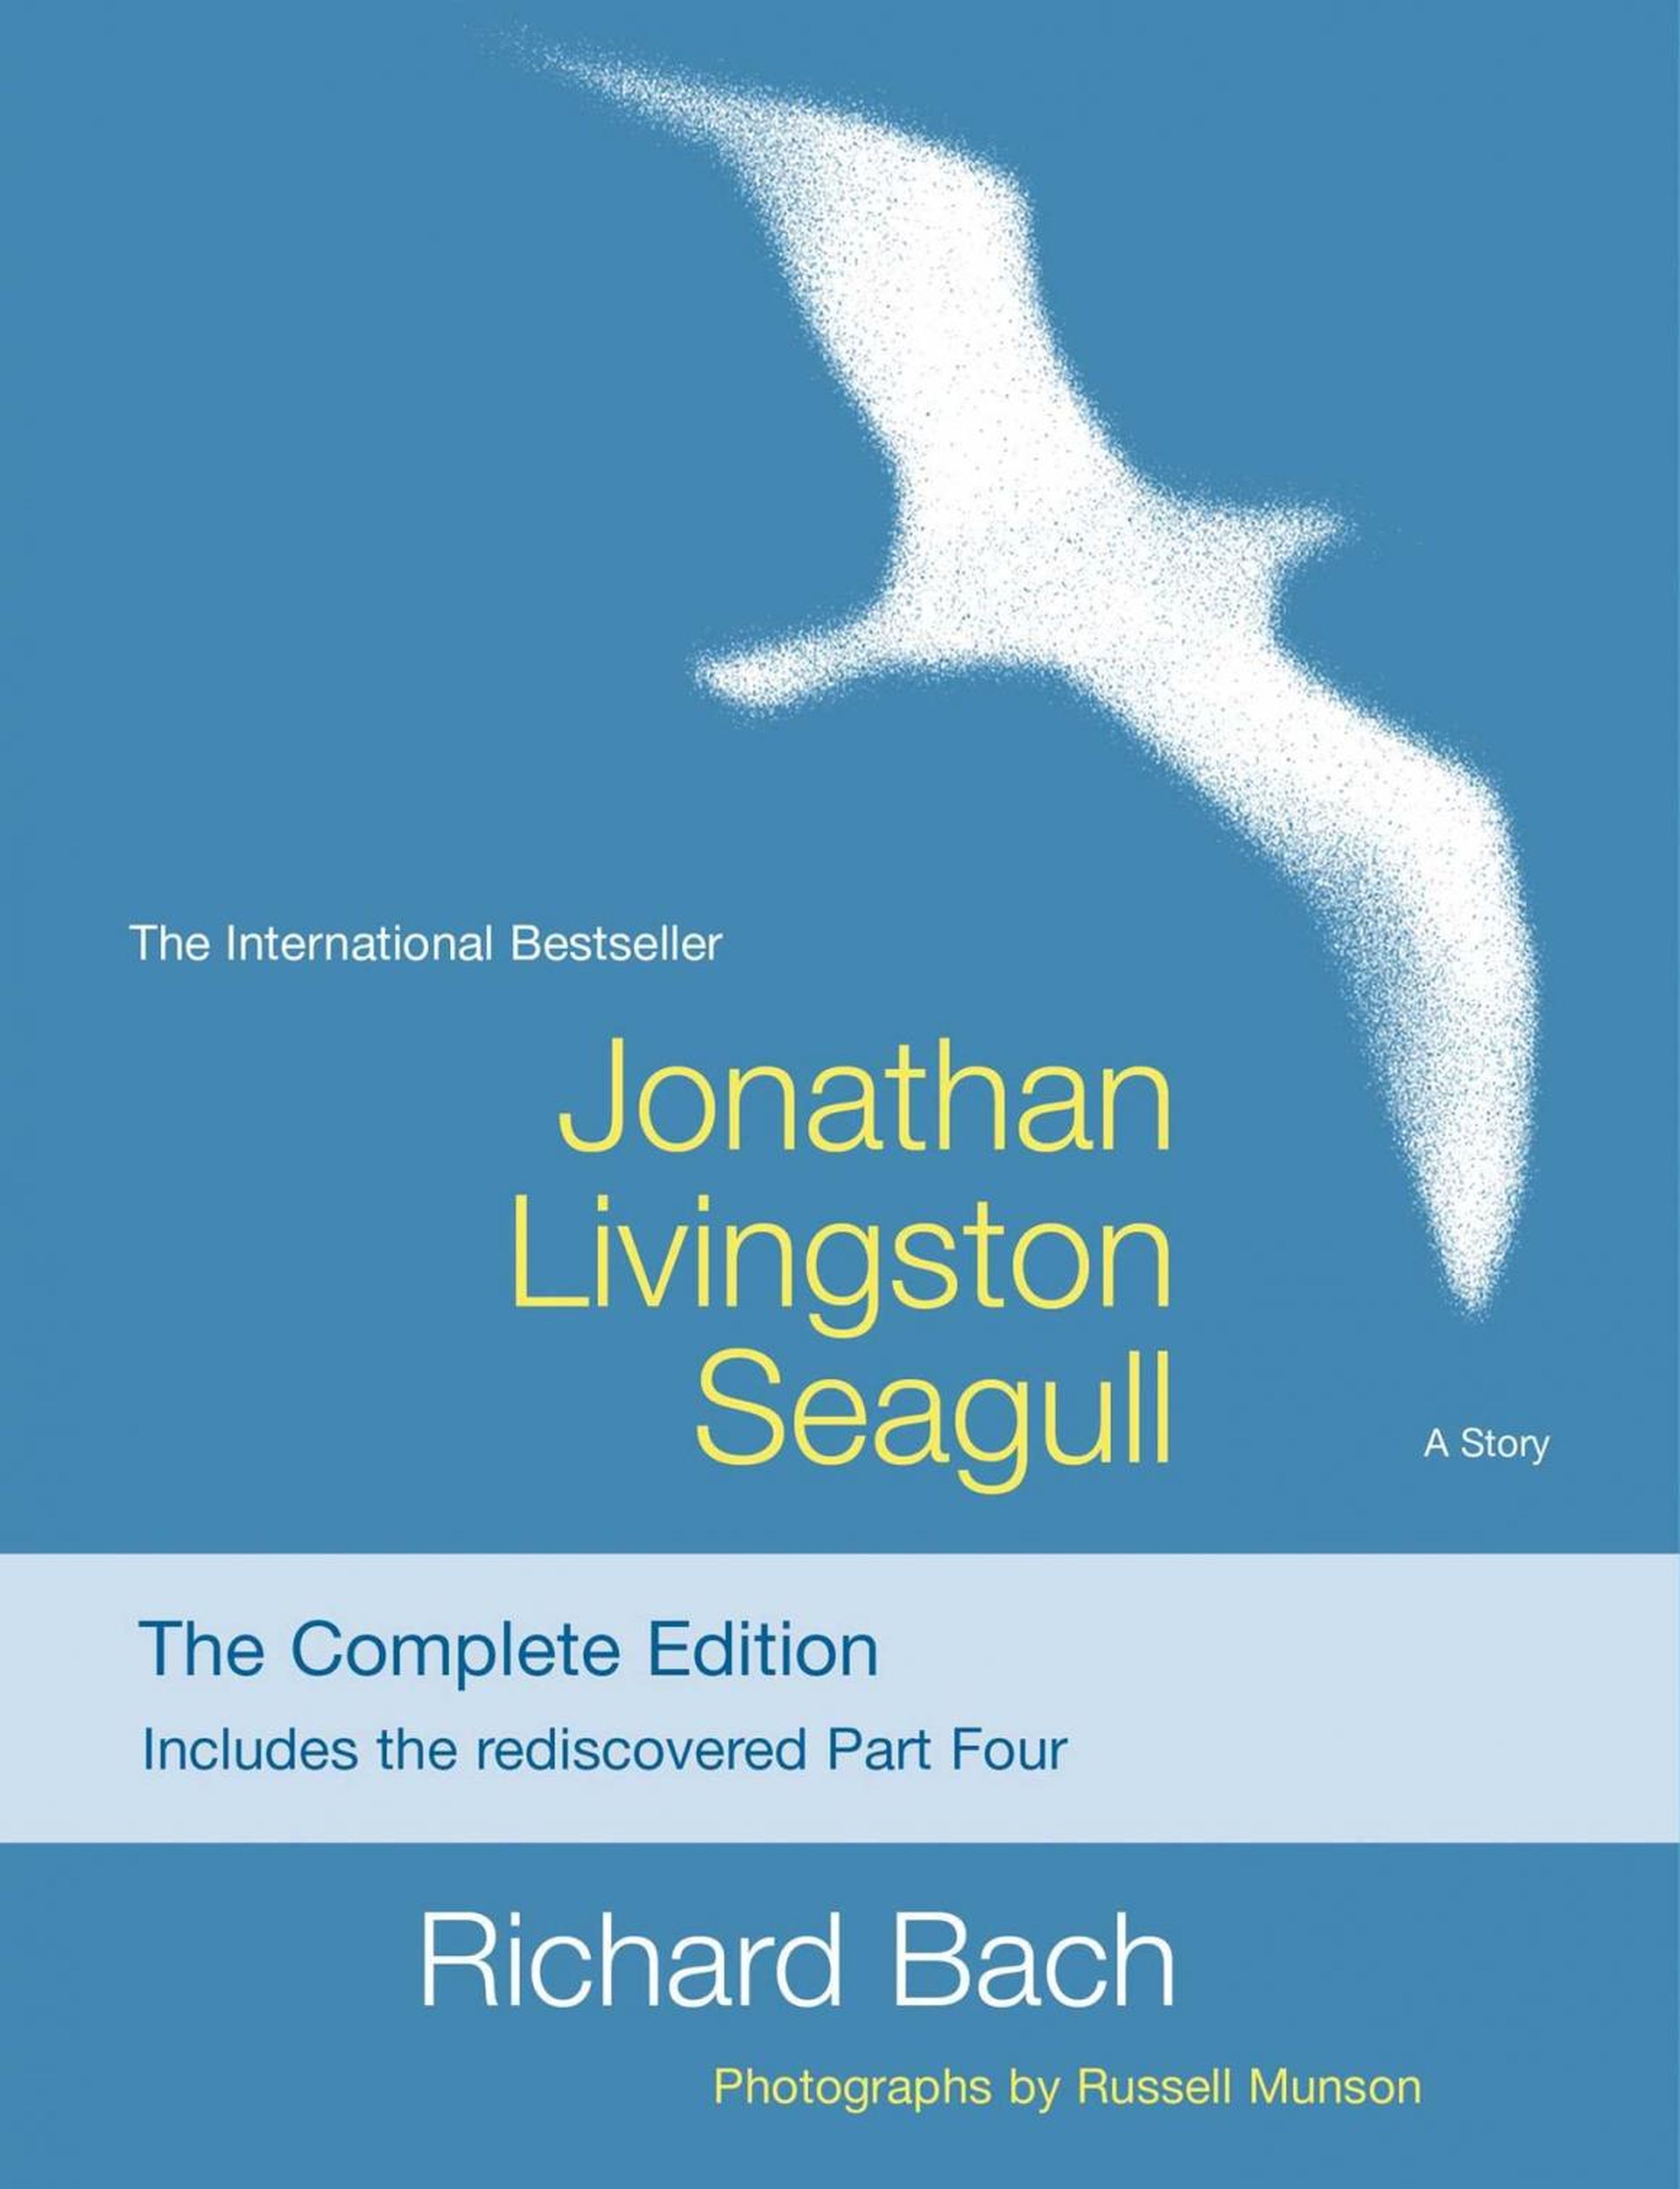 "Jonathan Livingston Seagull" by Richard Bach